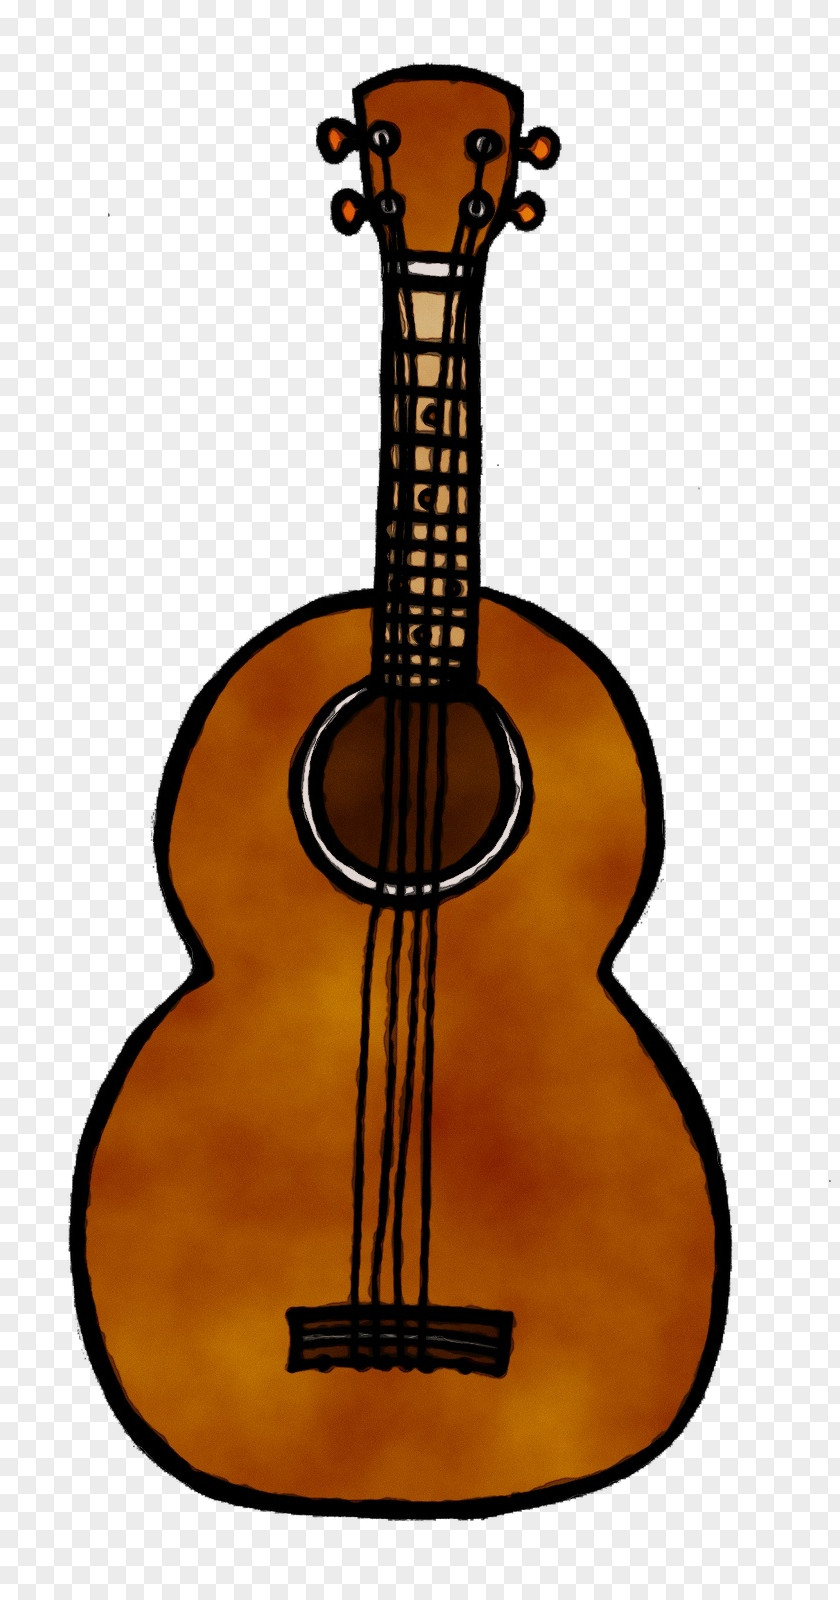 Indian Musical Instruments Viol Guitar PNG